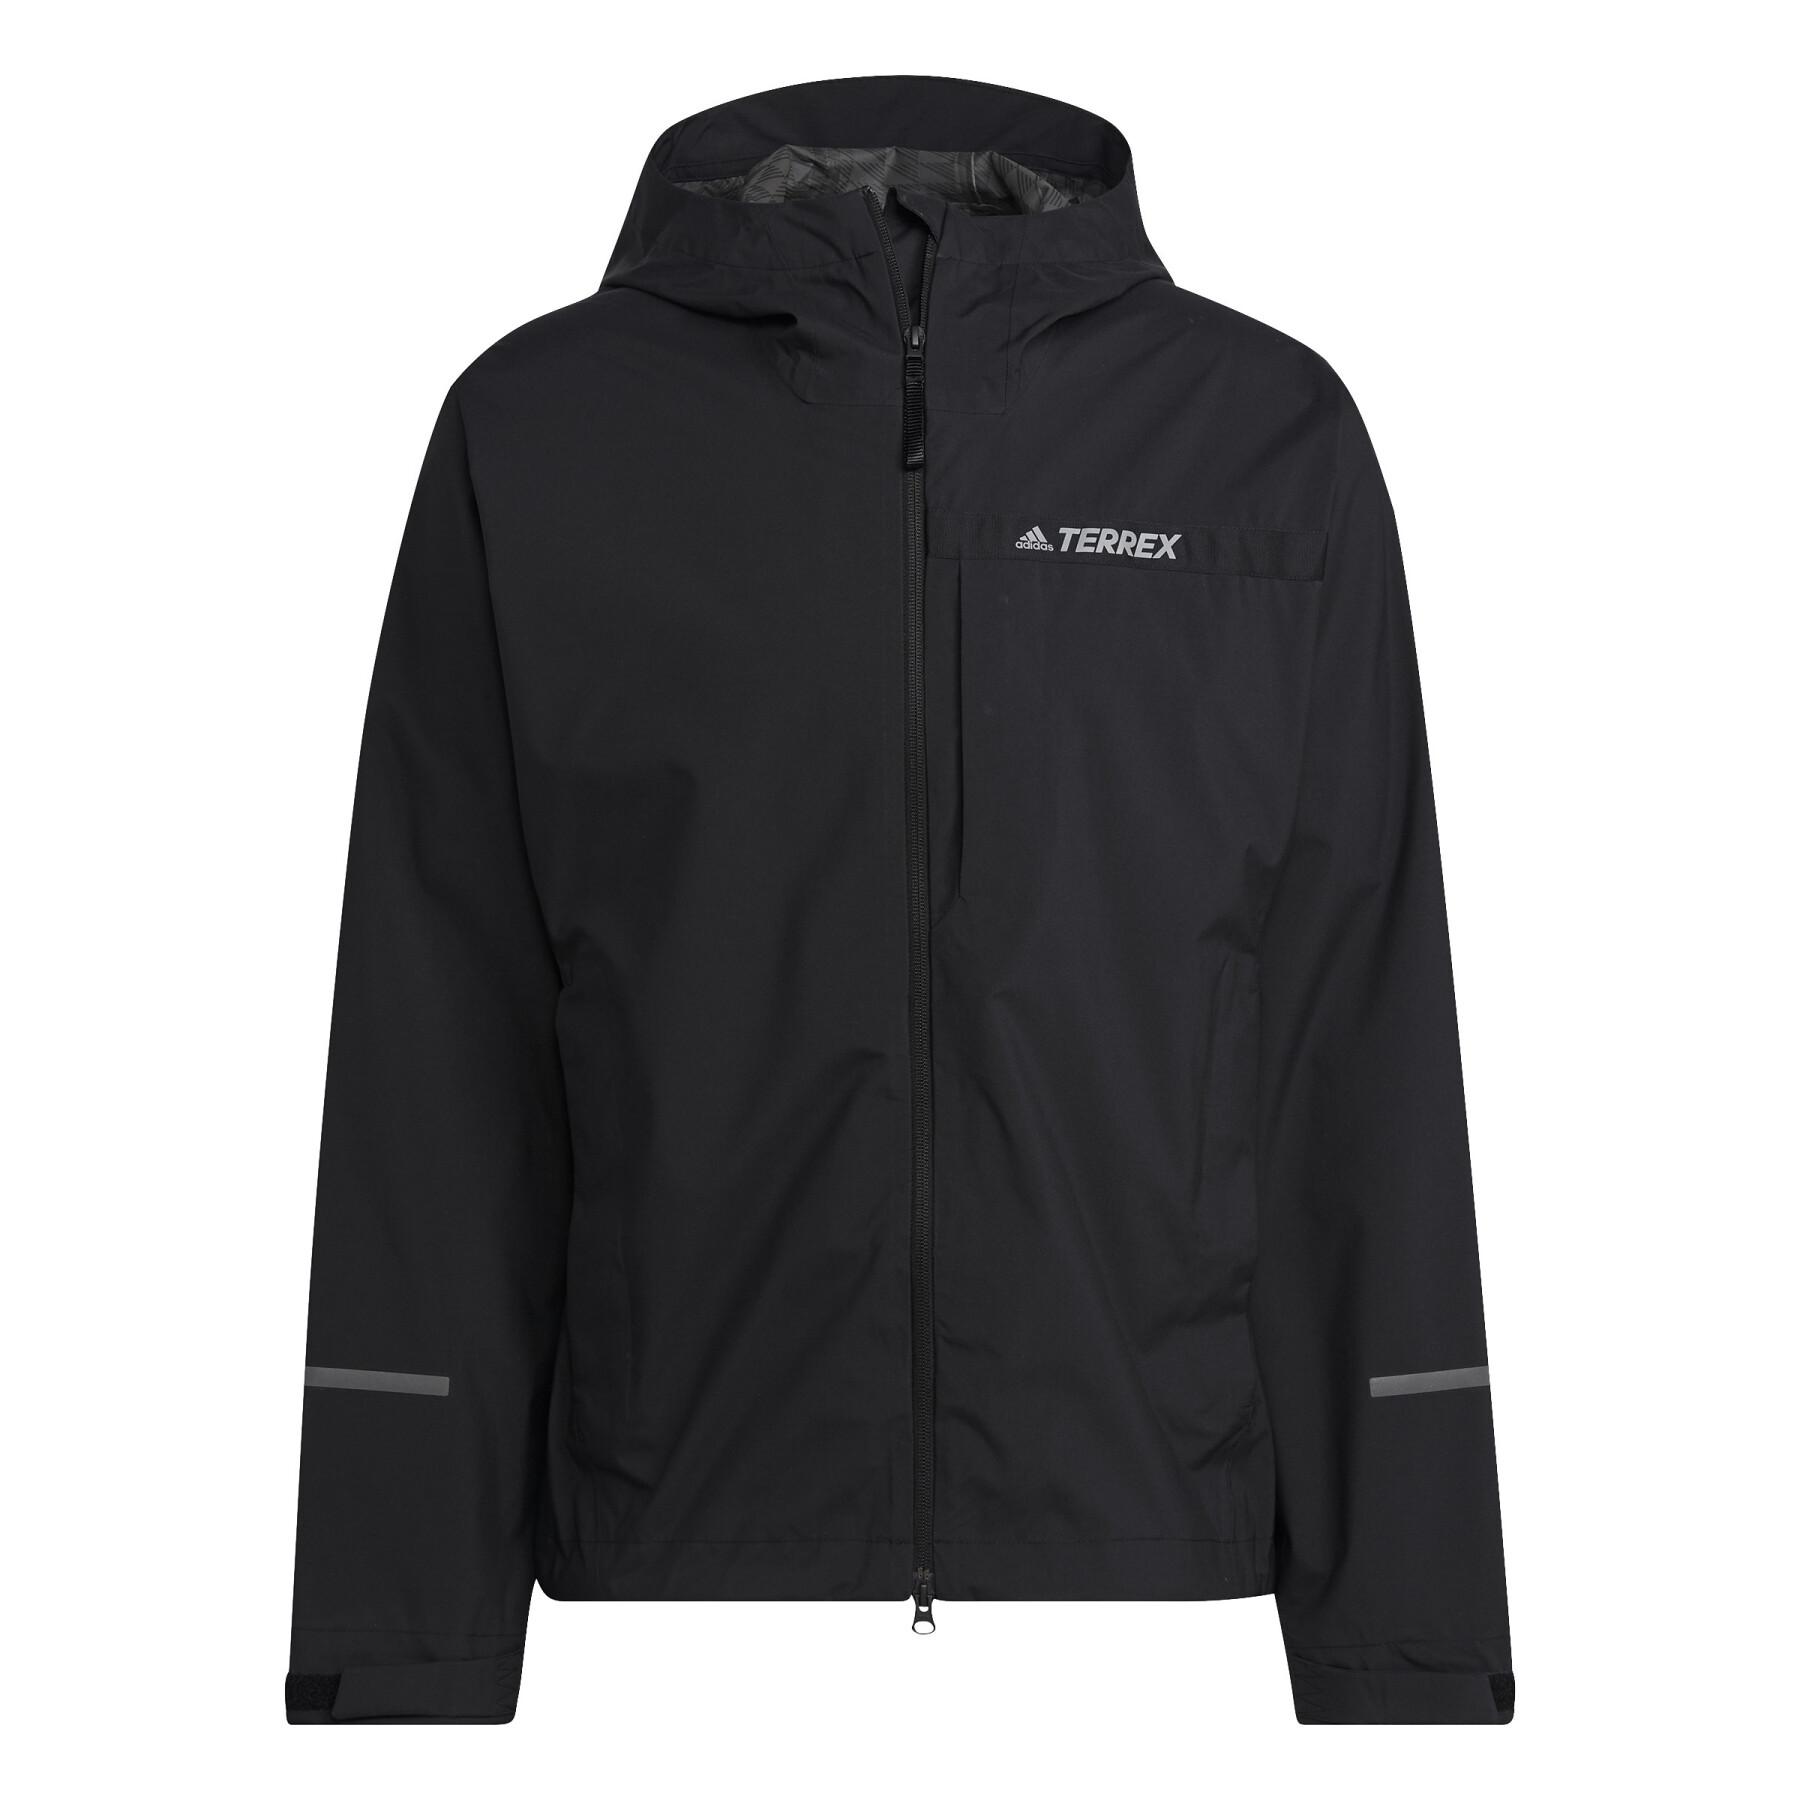 Jackets jacket - Clothing layer Terrex Multi adidas Hiking waterproof Rain.Rdy - 2.5 -